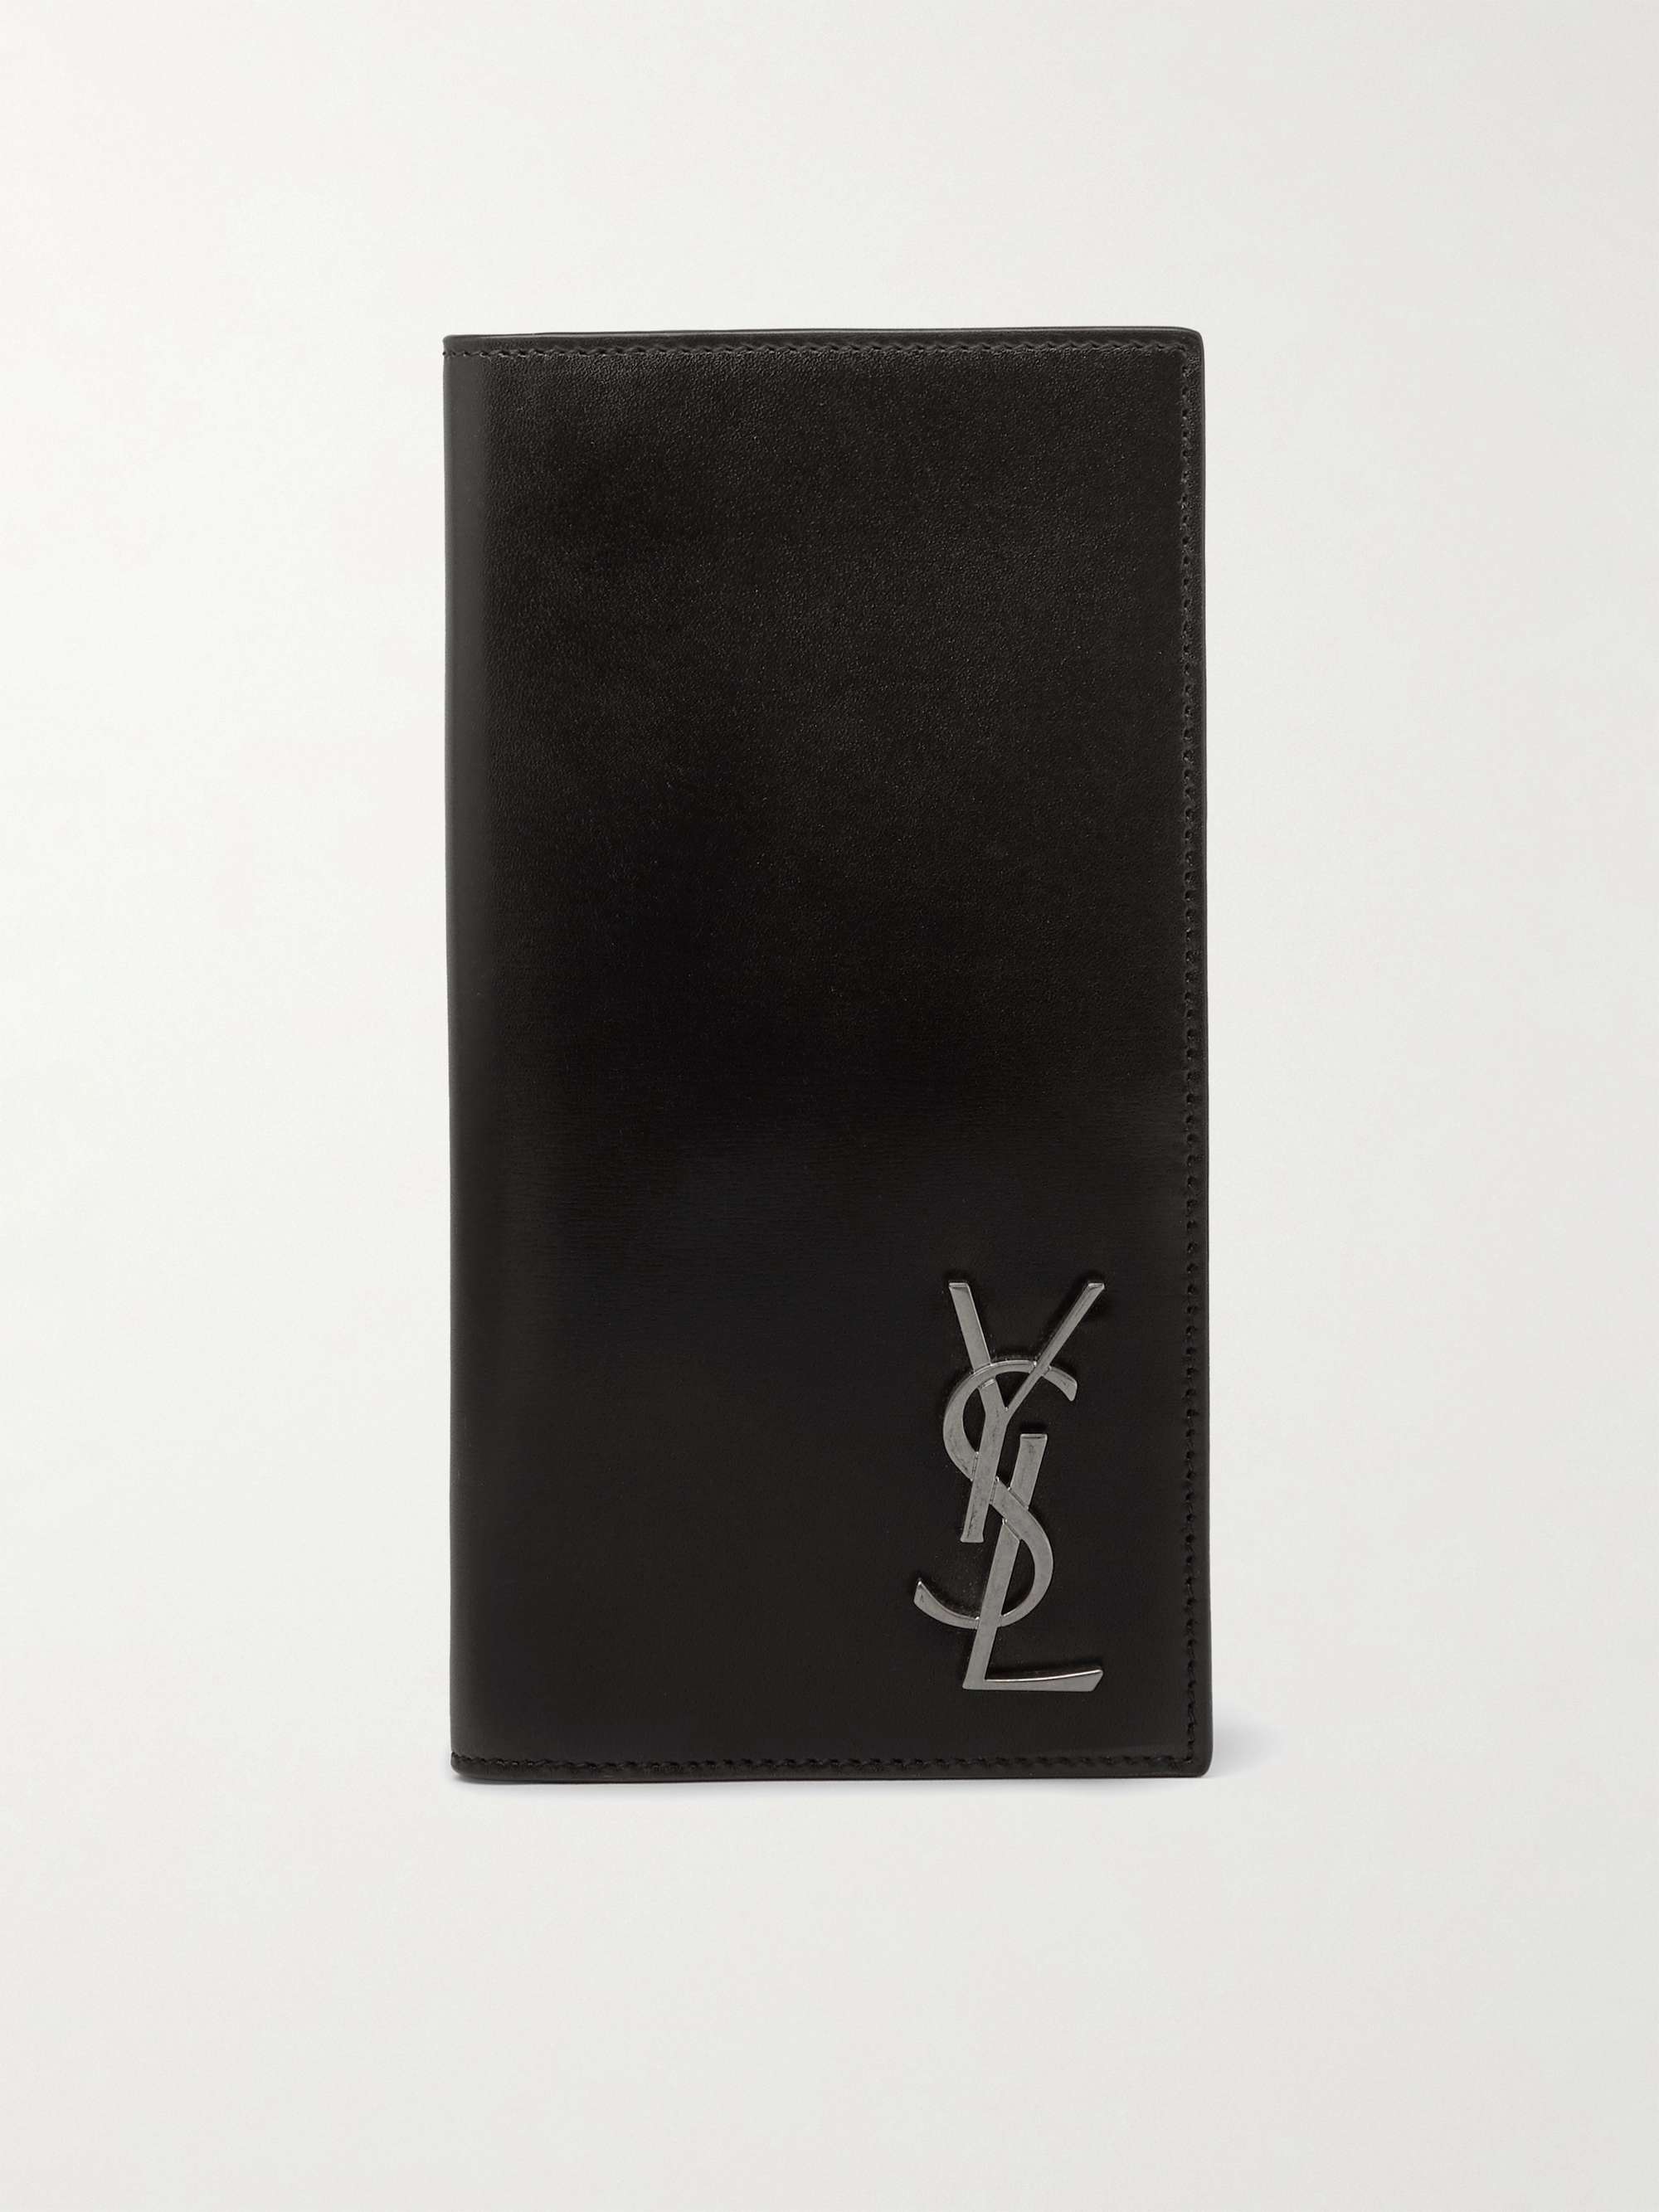 Saint Laurent Logo-Appliquéd Leather Billfold Wallet - Men - Black Wallets